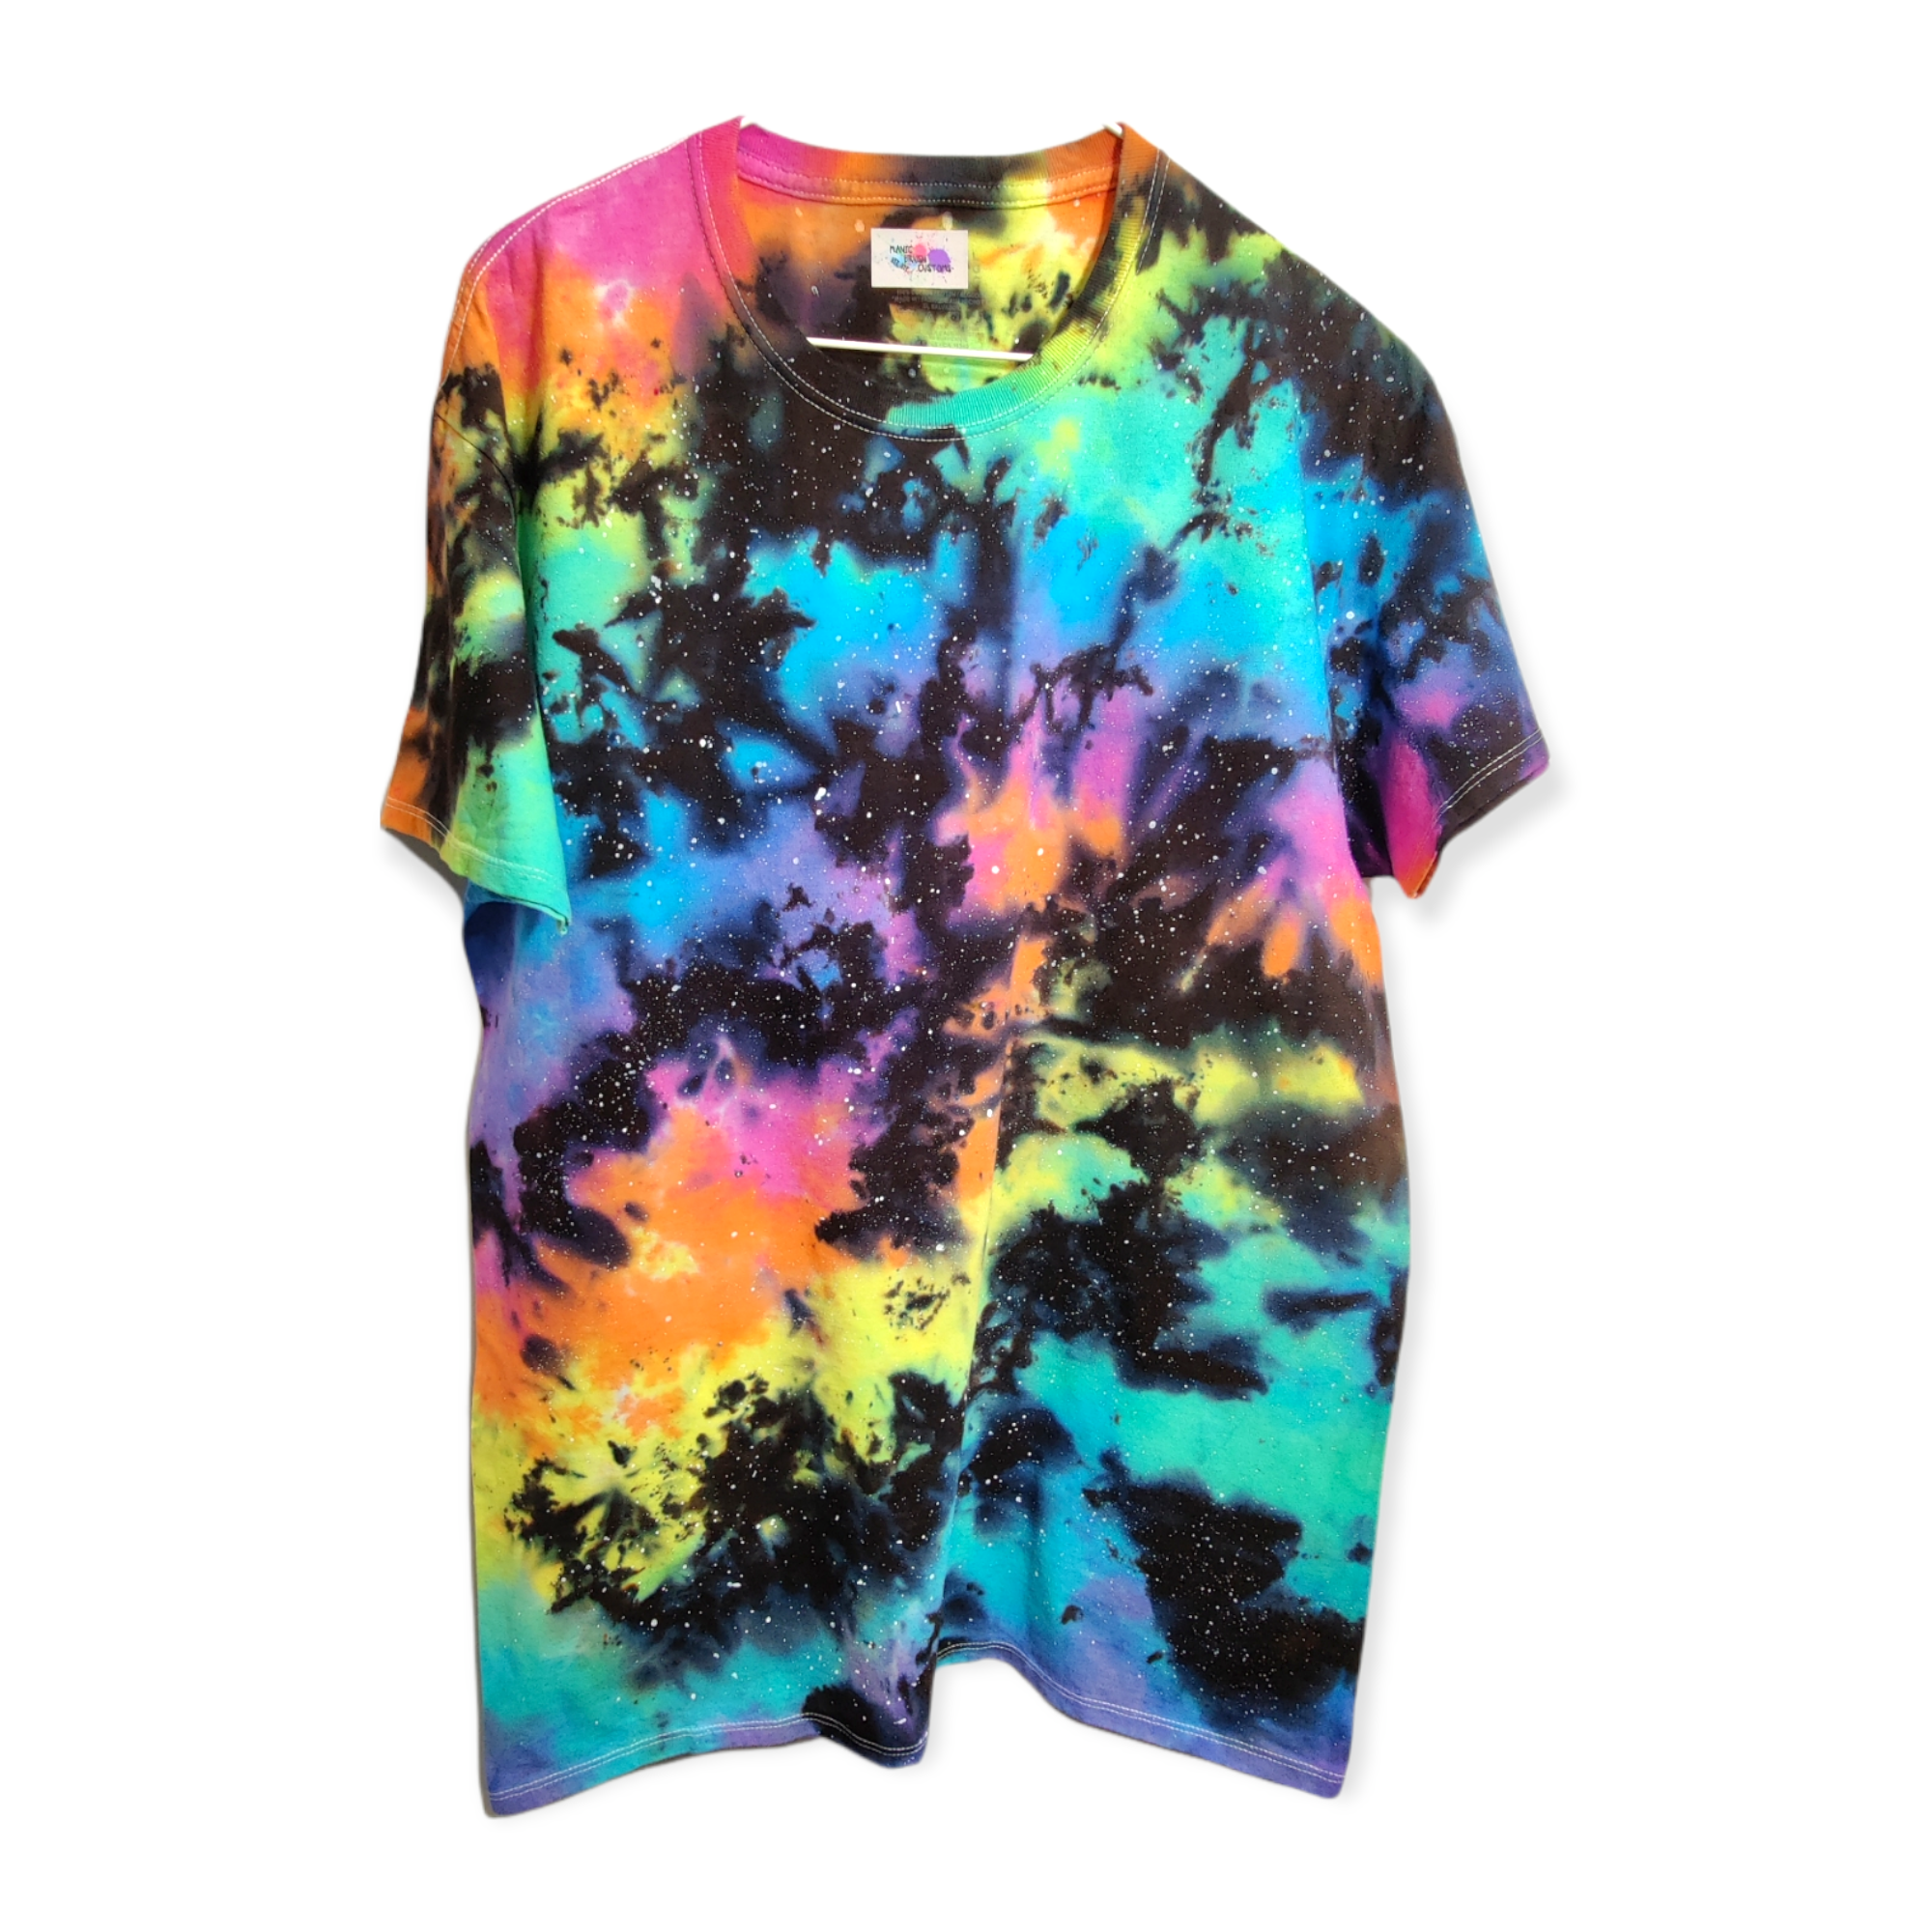 Pastel Rainbow Galaxy Tie Dye T-Shirt Large